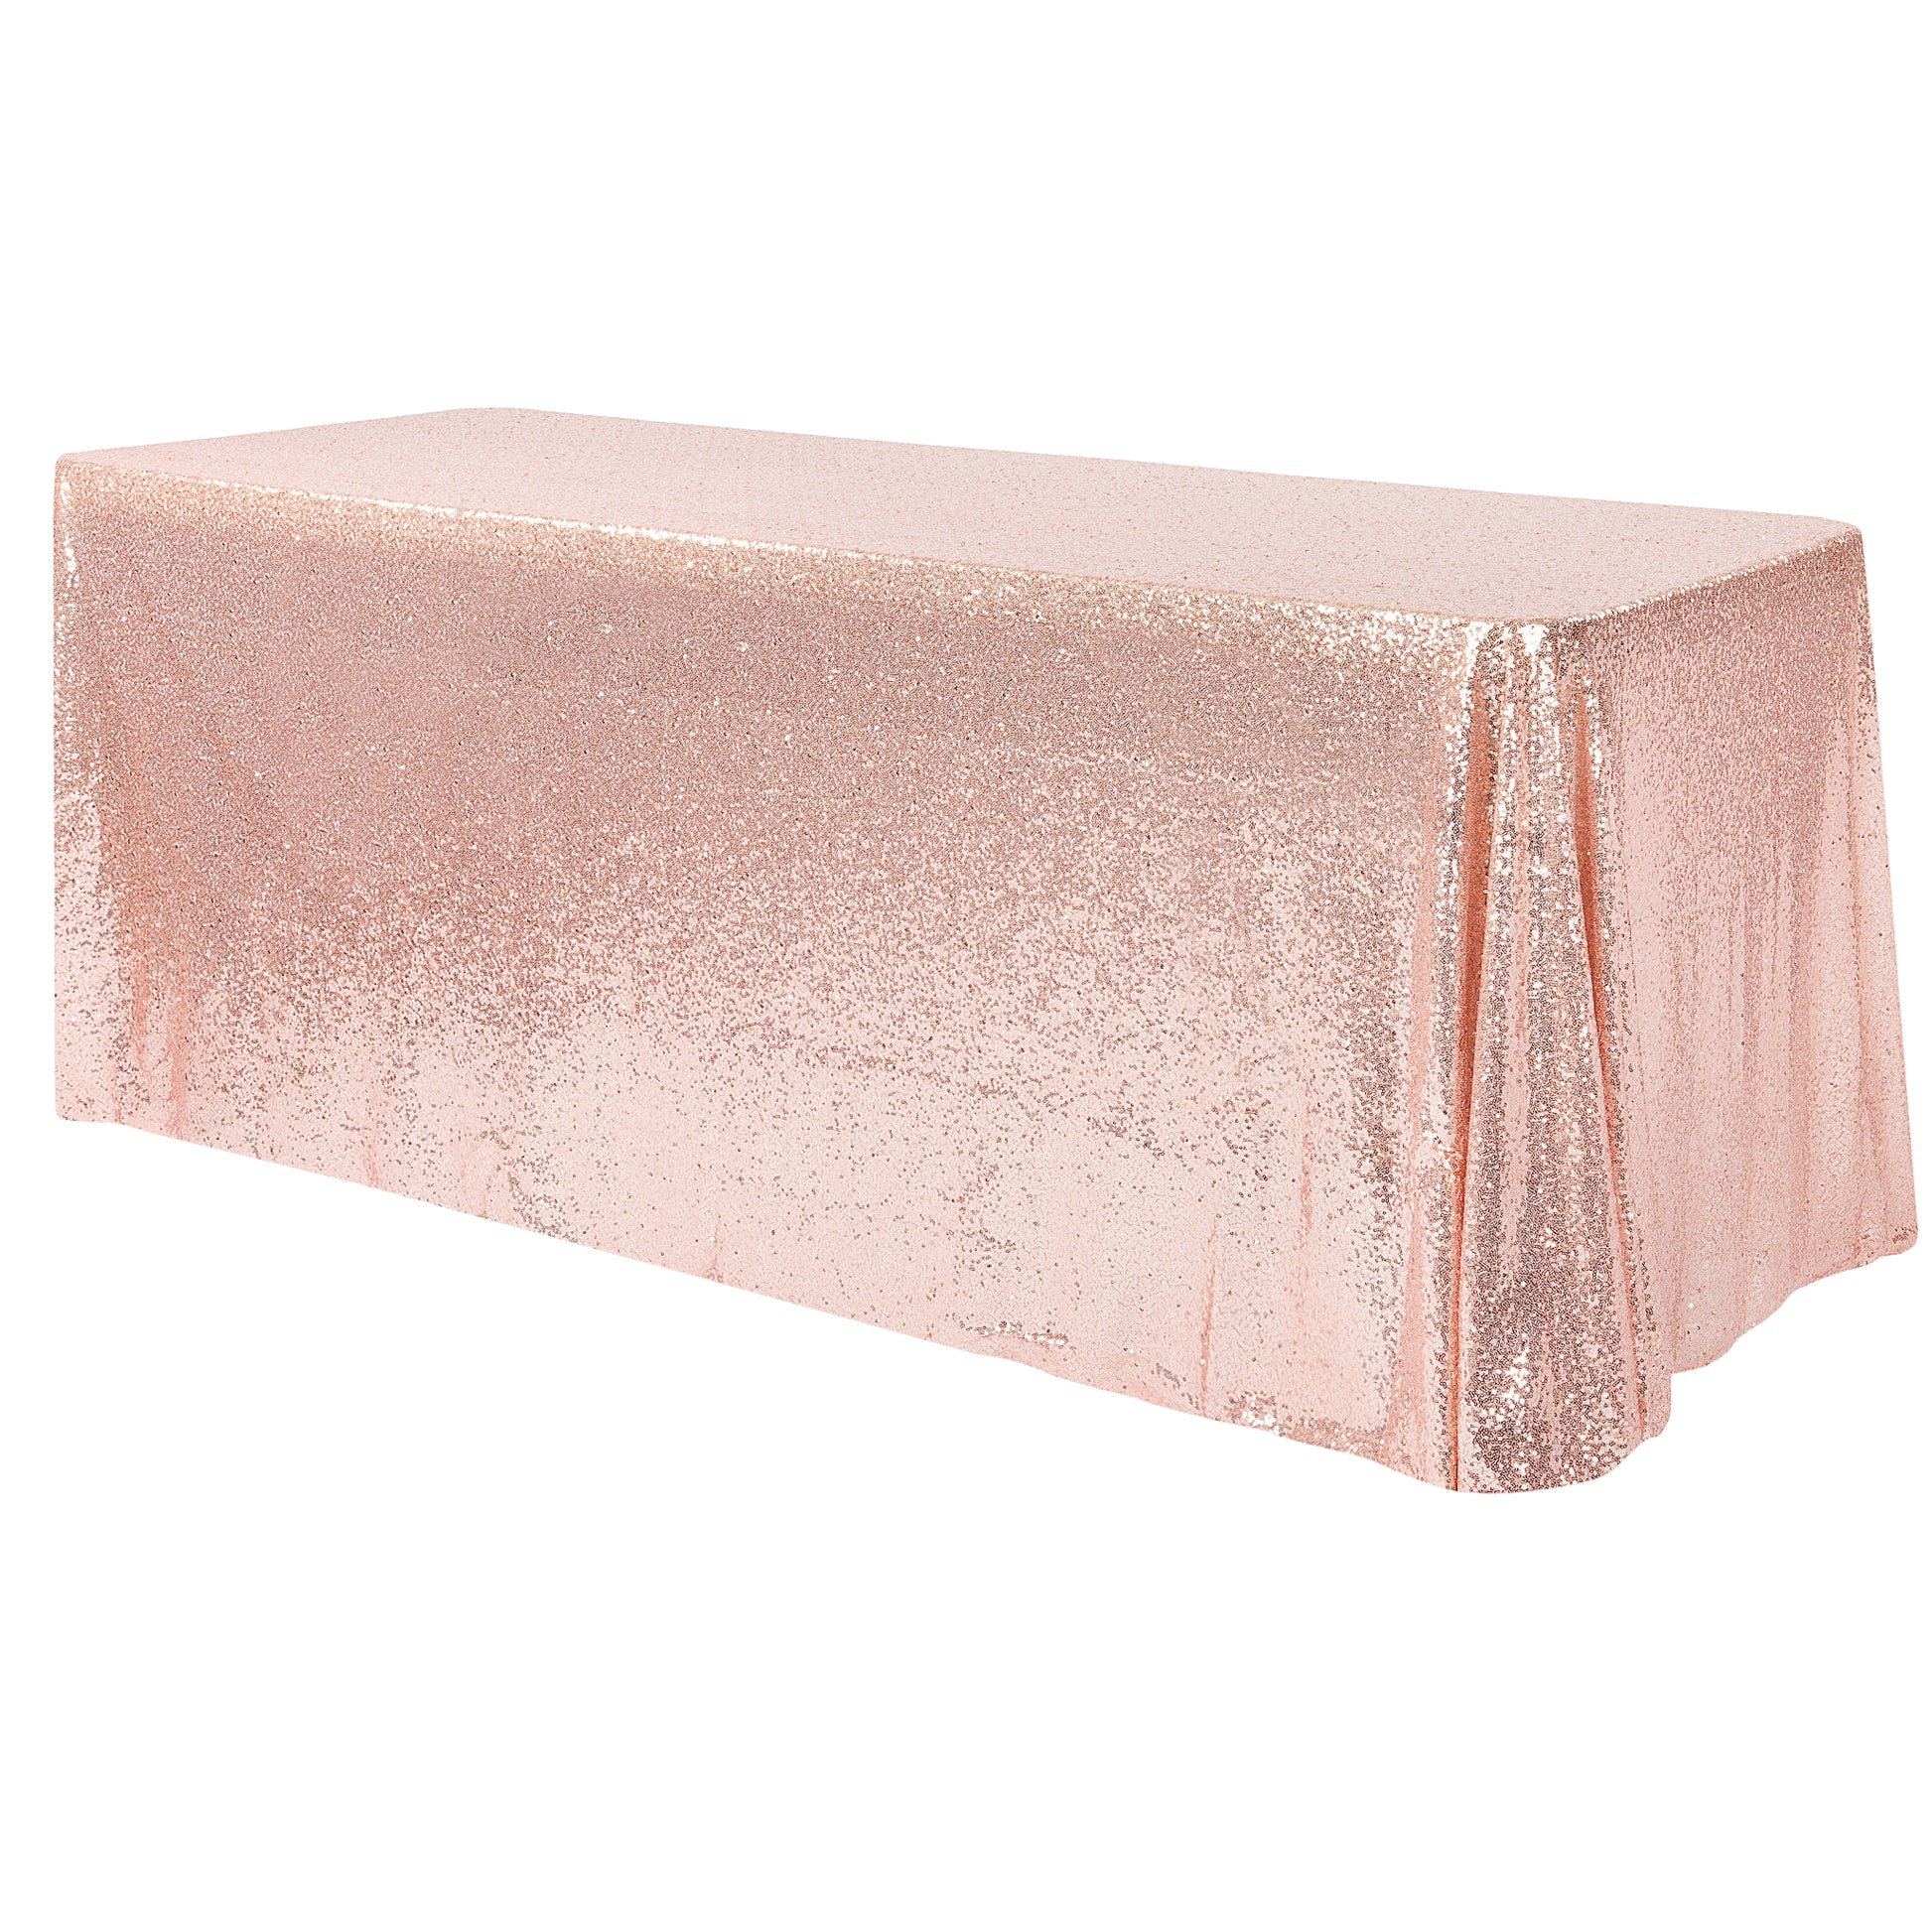 Glitz Sequin Mesh Net Tablecloth  90"x156" Rectangular -  Blush/Rose Gold - CV Linens